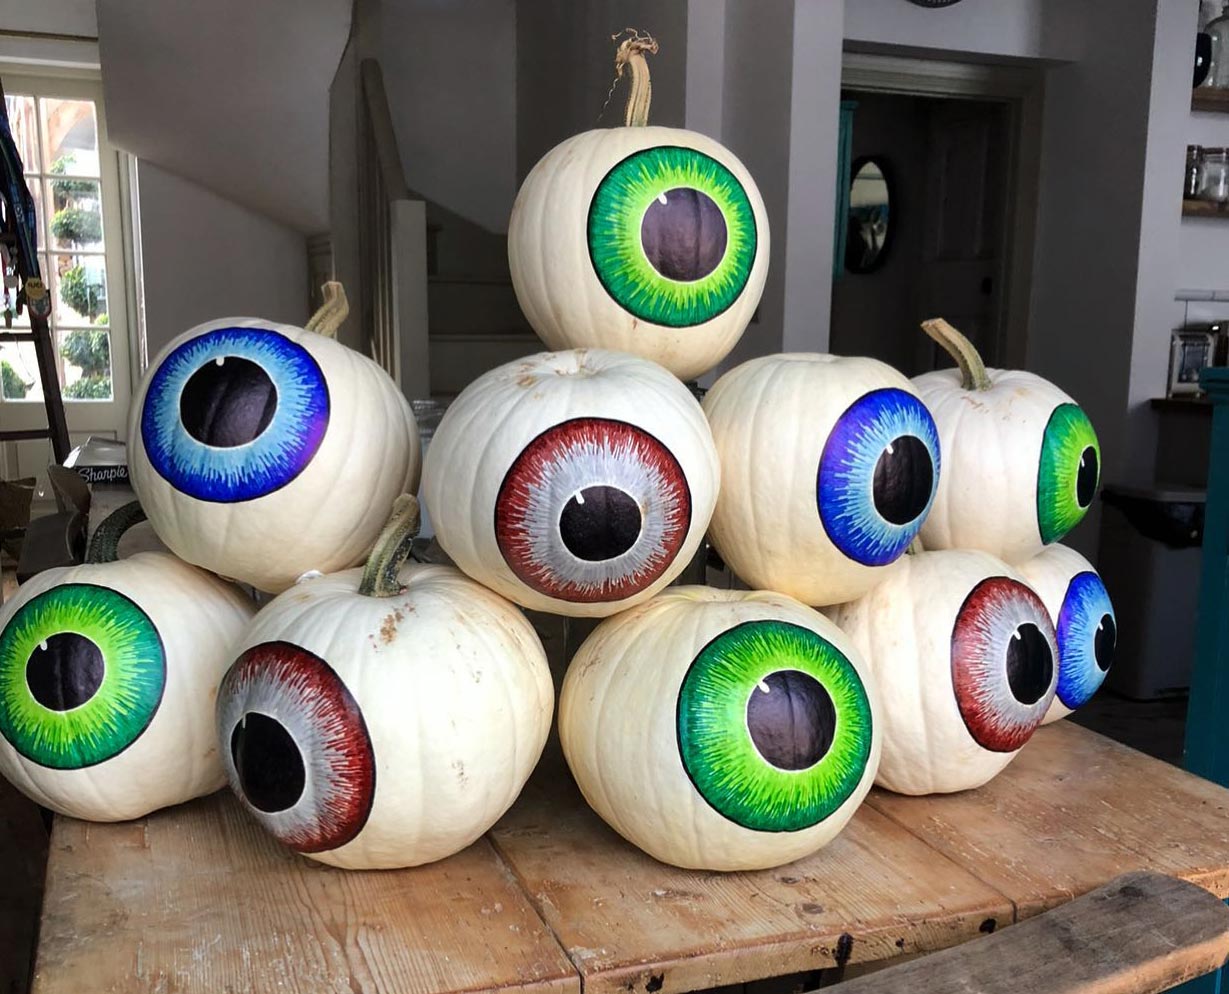 Many pumpkins painted like eyeballs